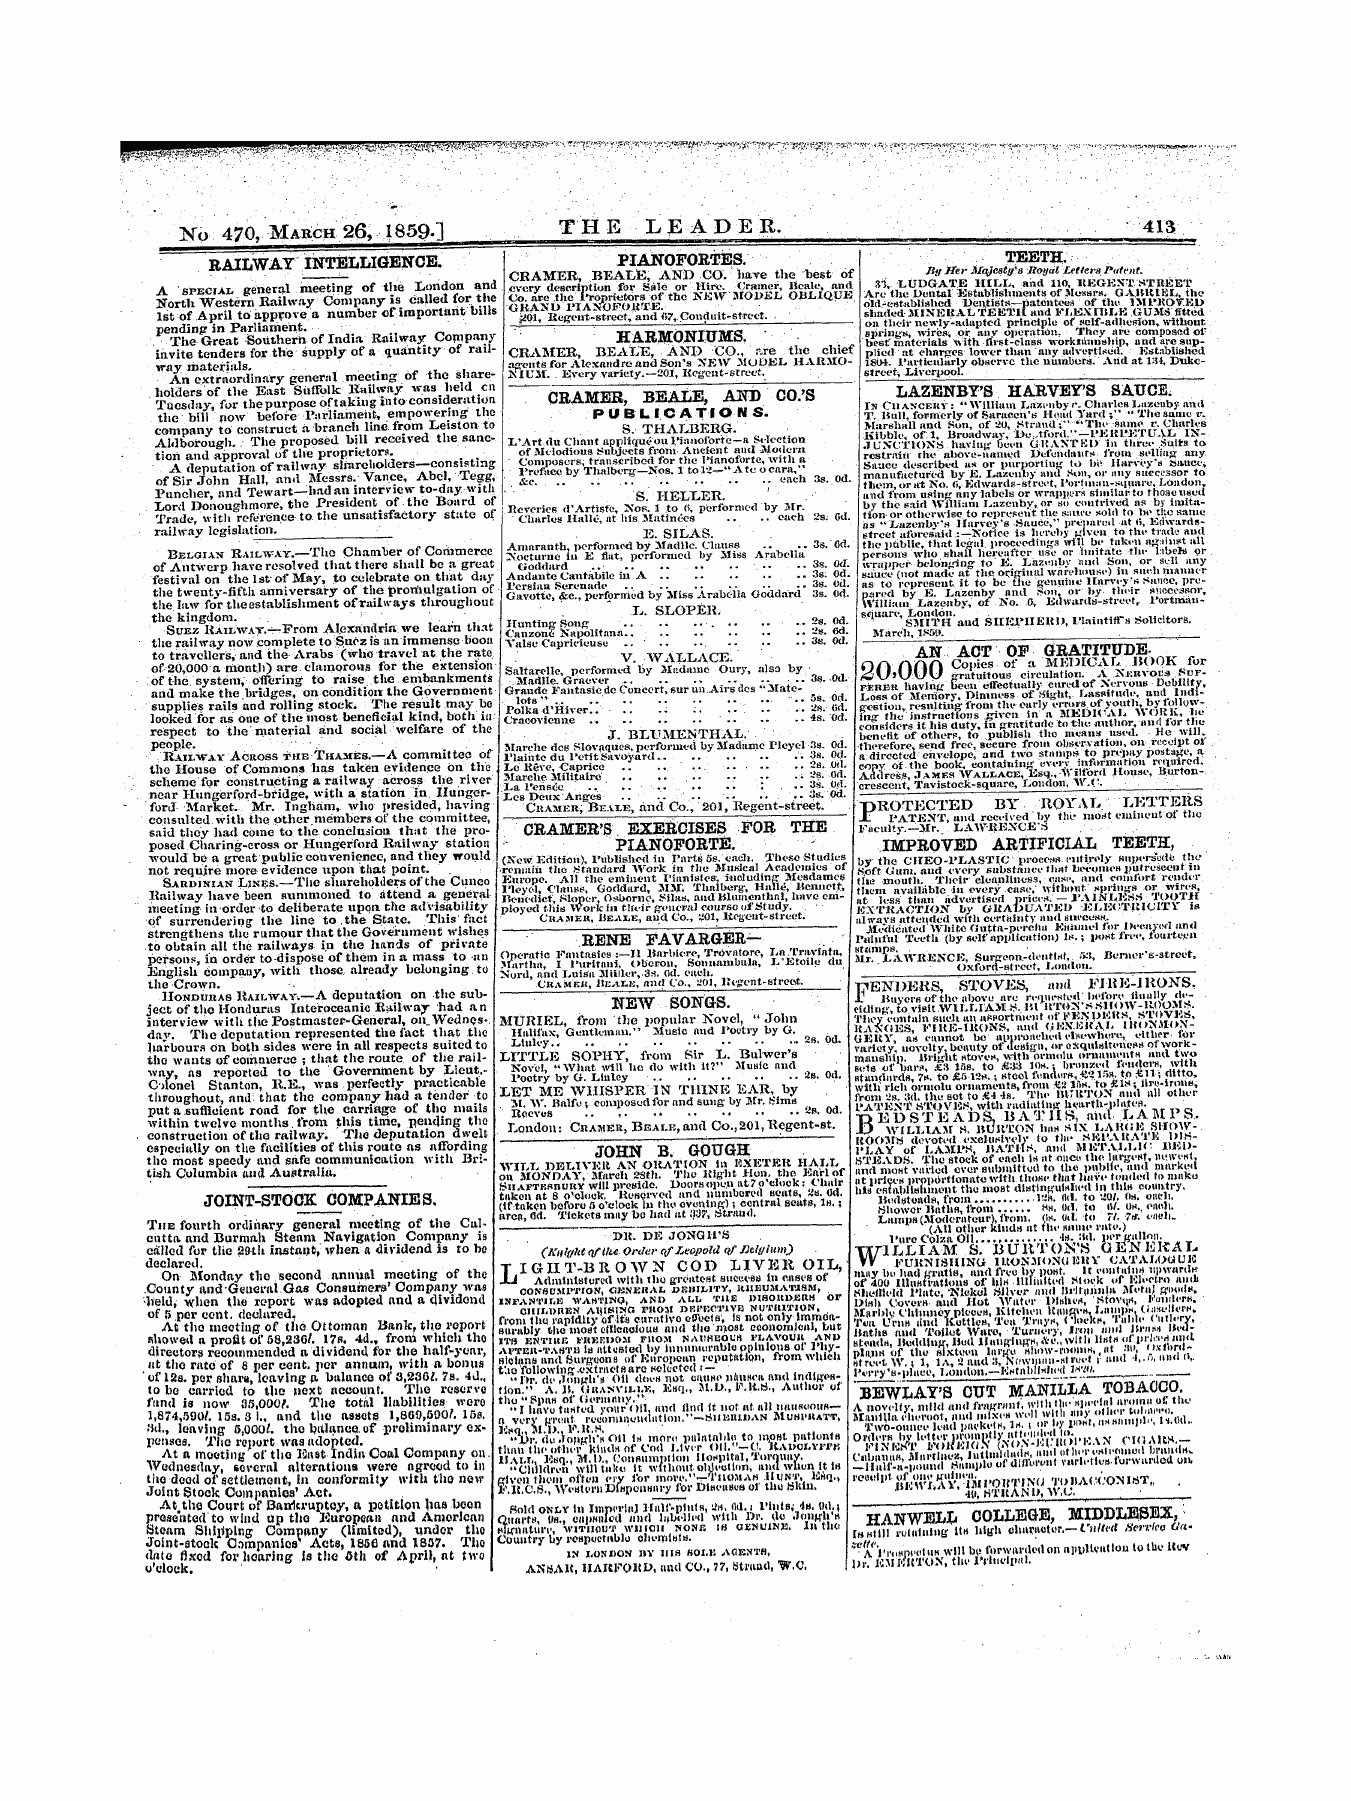 Leader (1850-1860): jS F Y, 1st edition - Pianofortes.